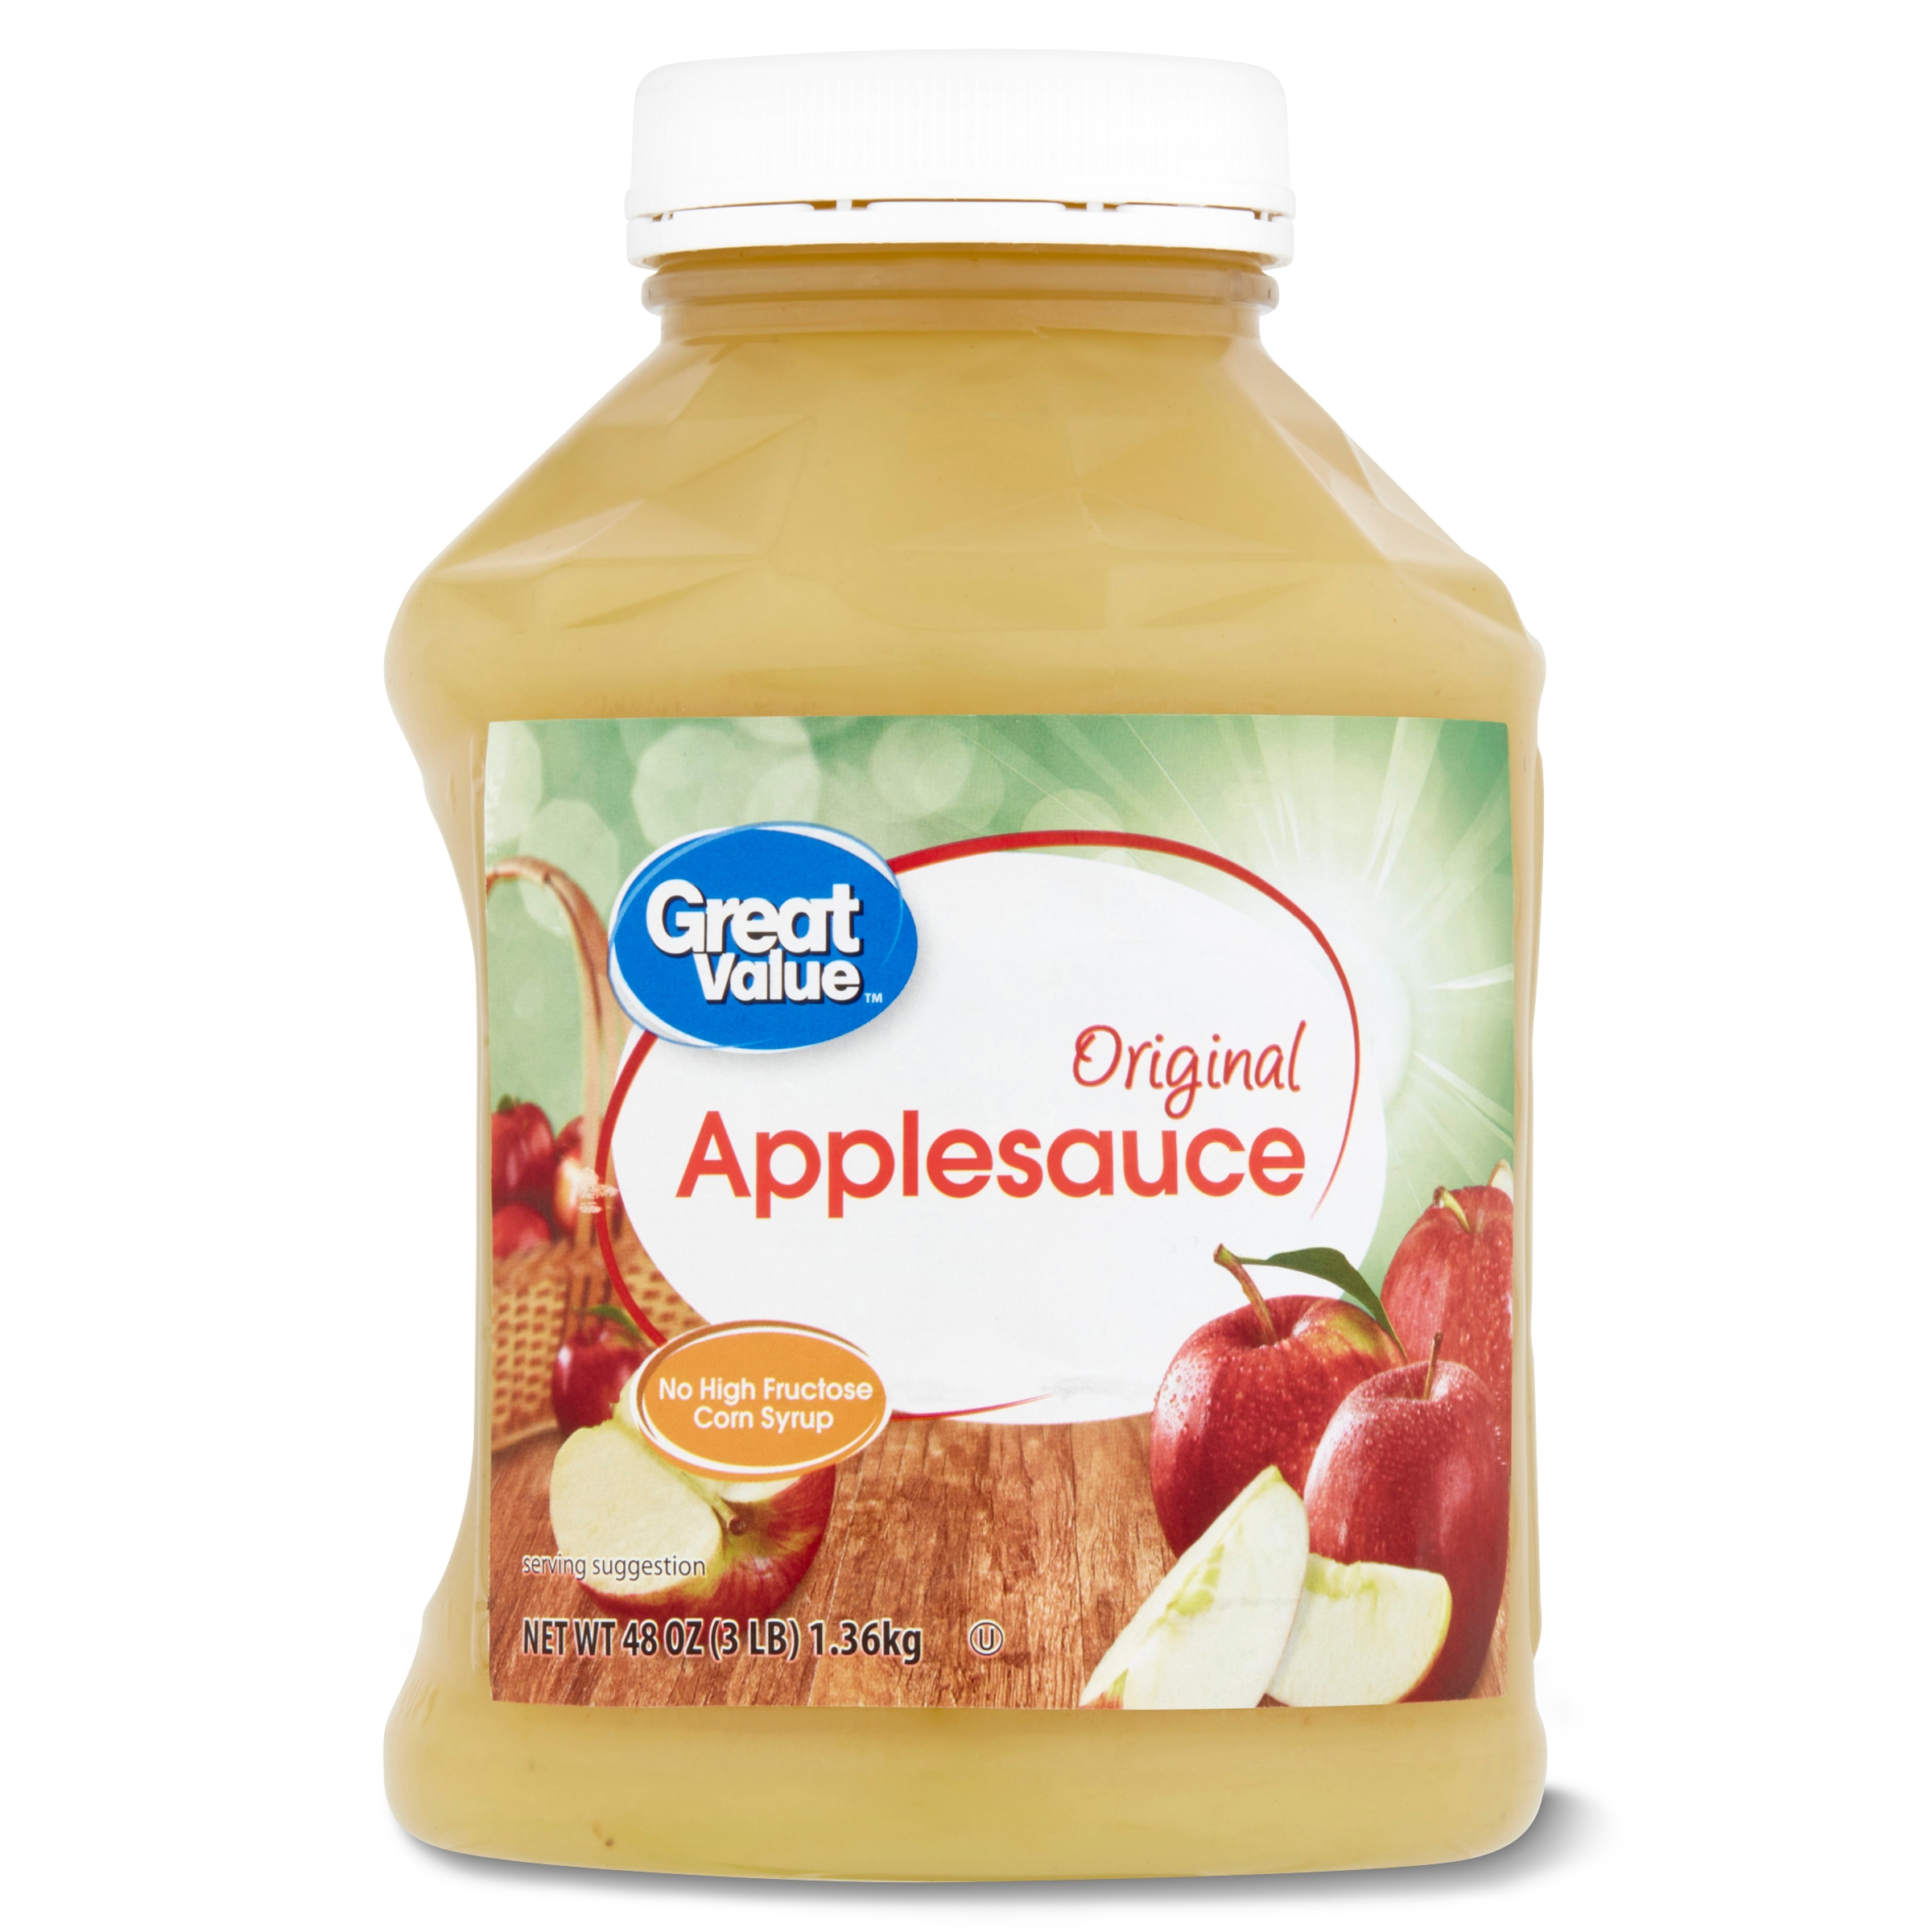 Great Value Original Applesauce, 48 oz Jar - image 1 of 7